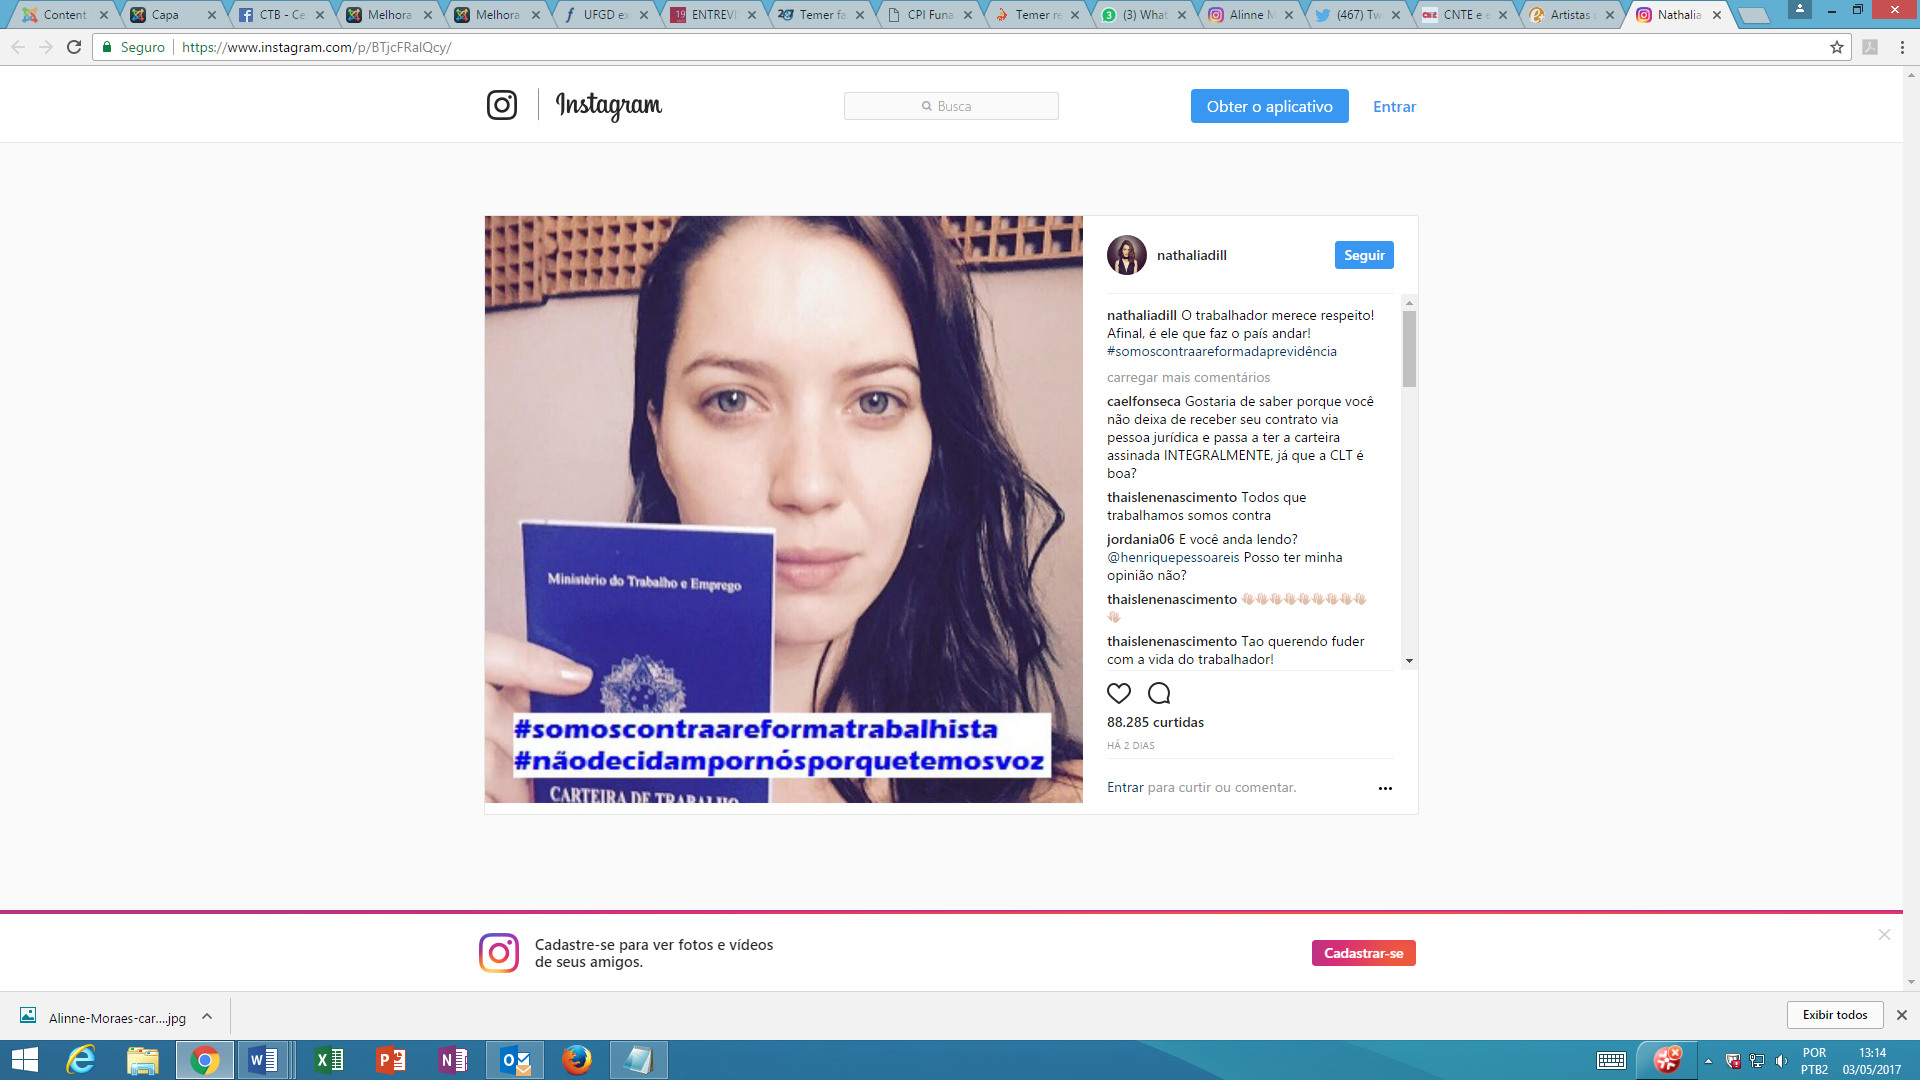 nathalia dill contra reformas instagram